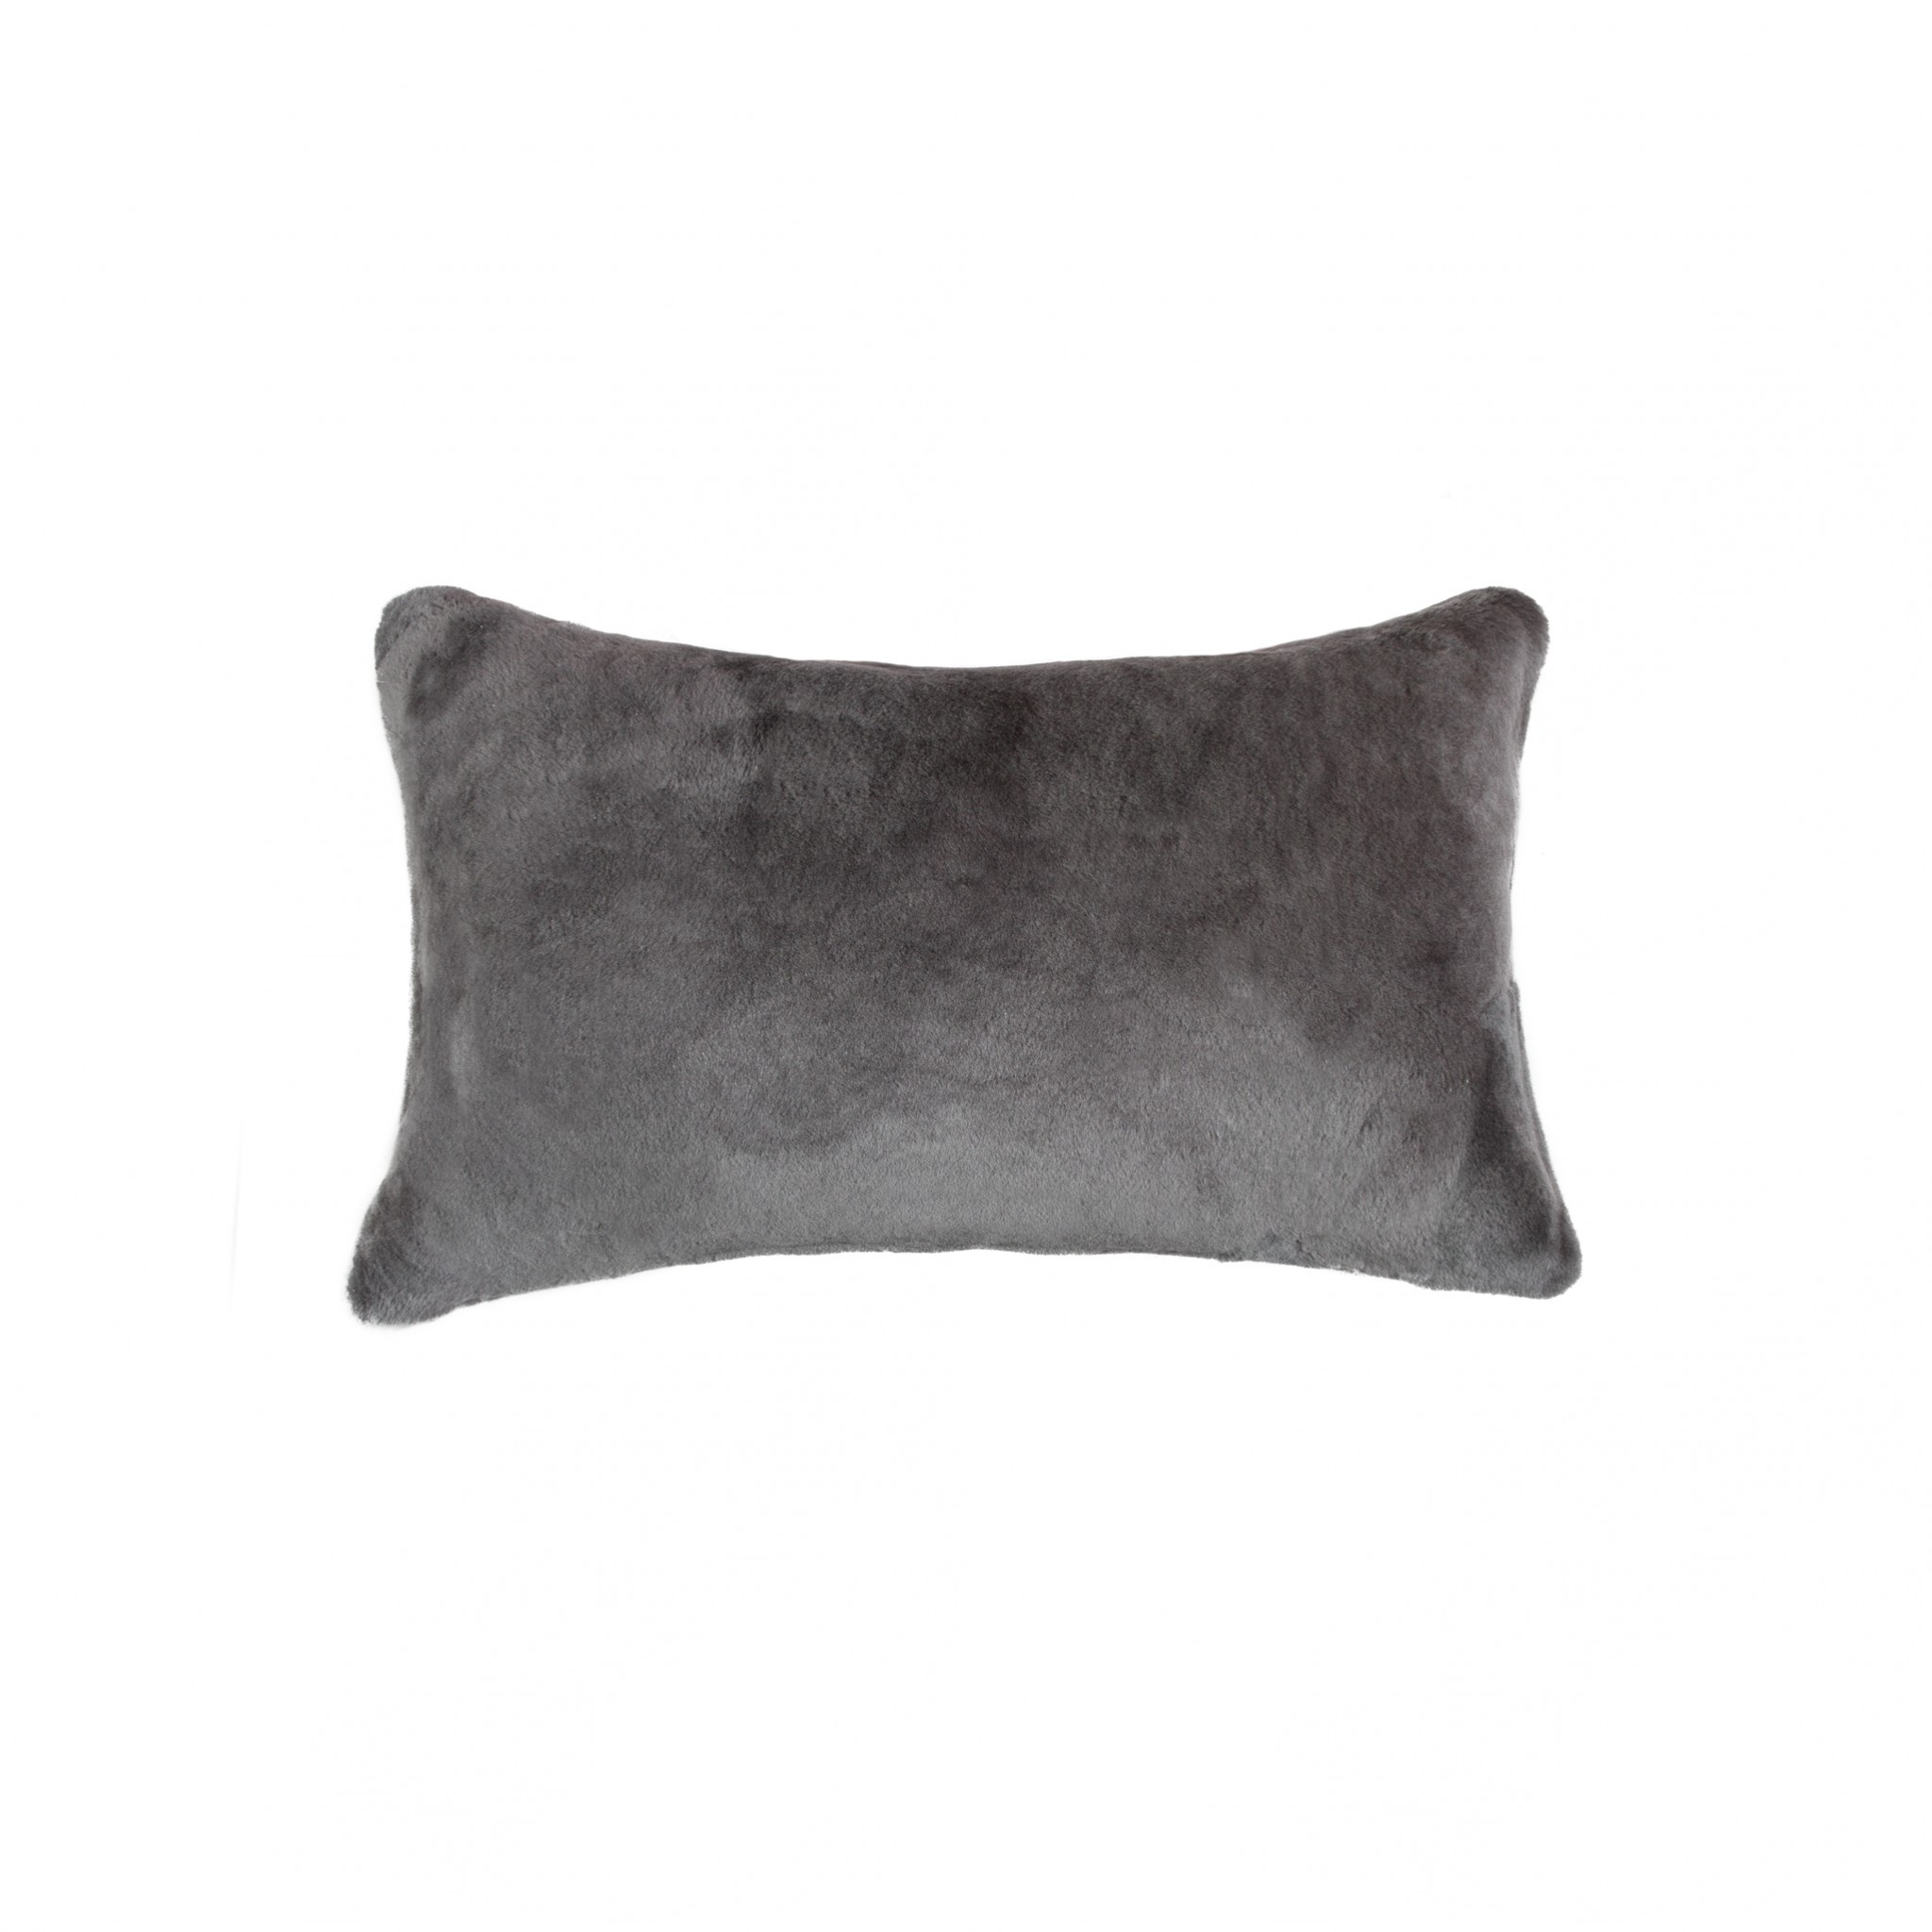 12" x 20" x 5" Grey Sheepskin - Pillow